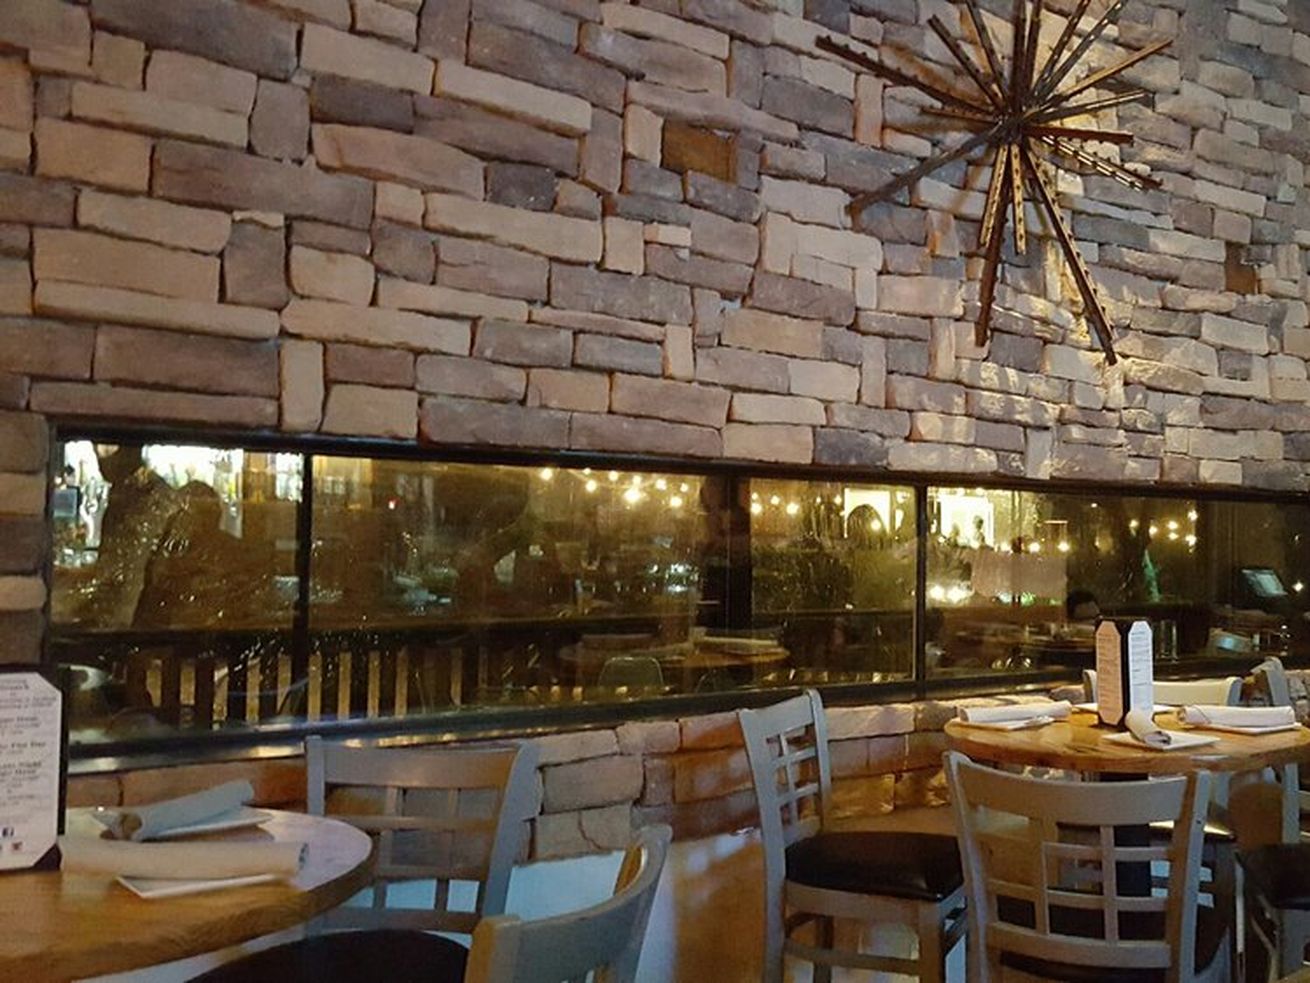 Oasthouse Kitchen & Bar - Lake Travis Restaurant